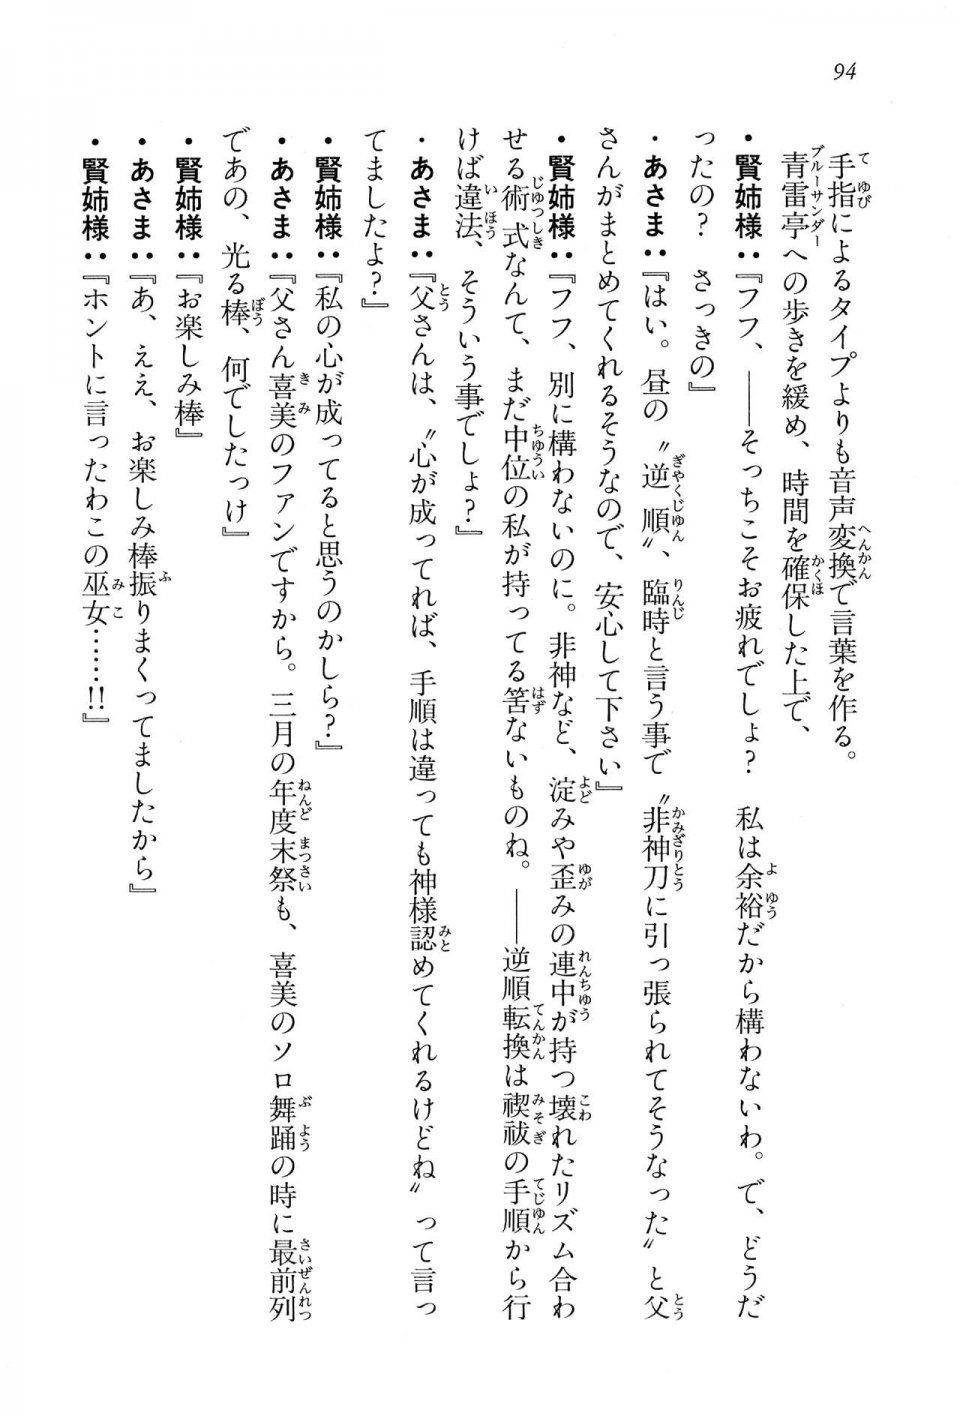 Kyoukai Senjou no Horizon BD Special Mininovel Vol 1(1A) - Photo #98